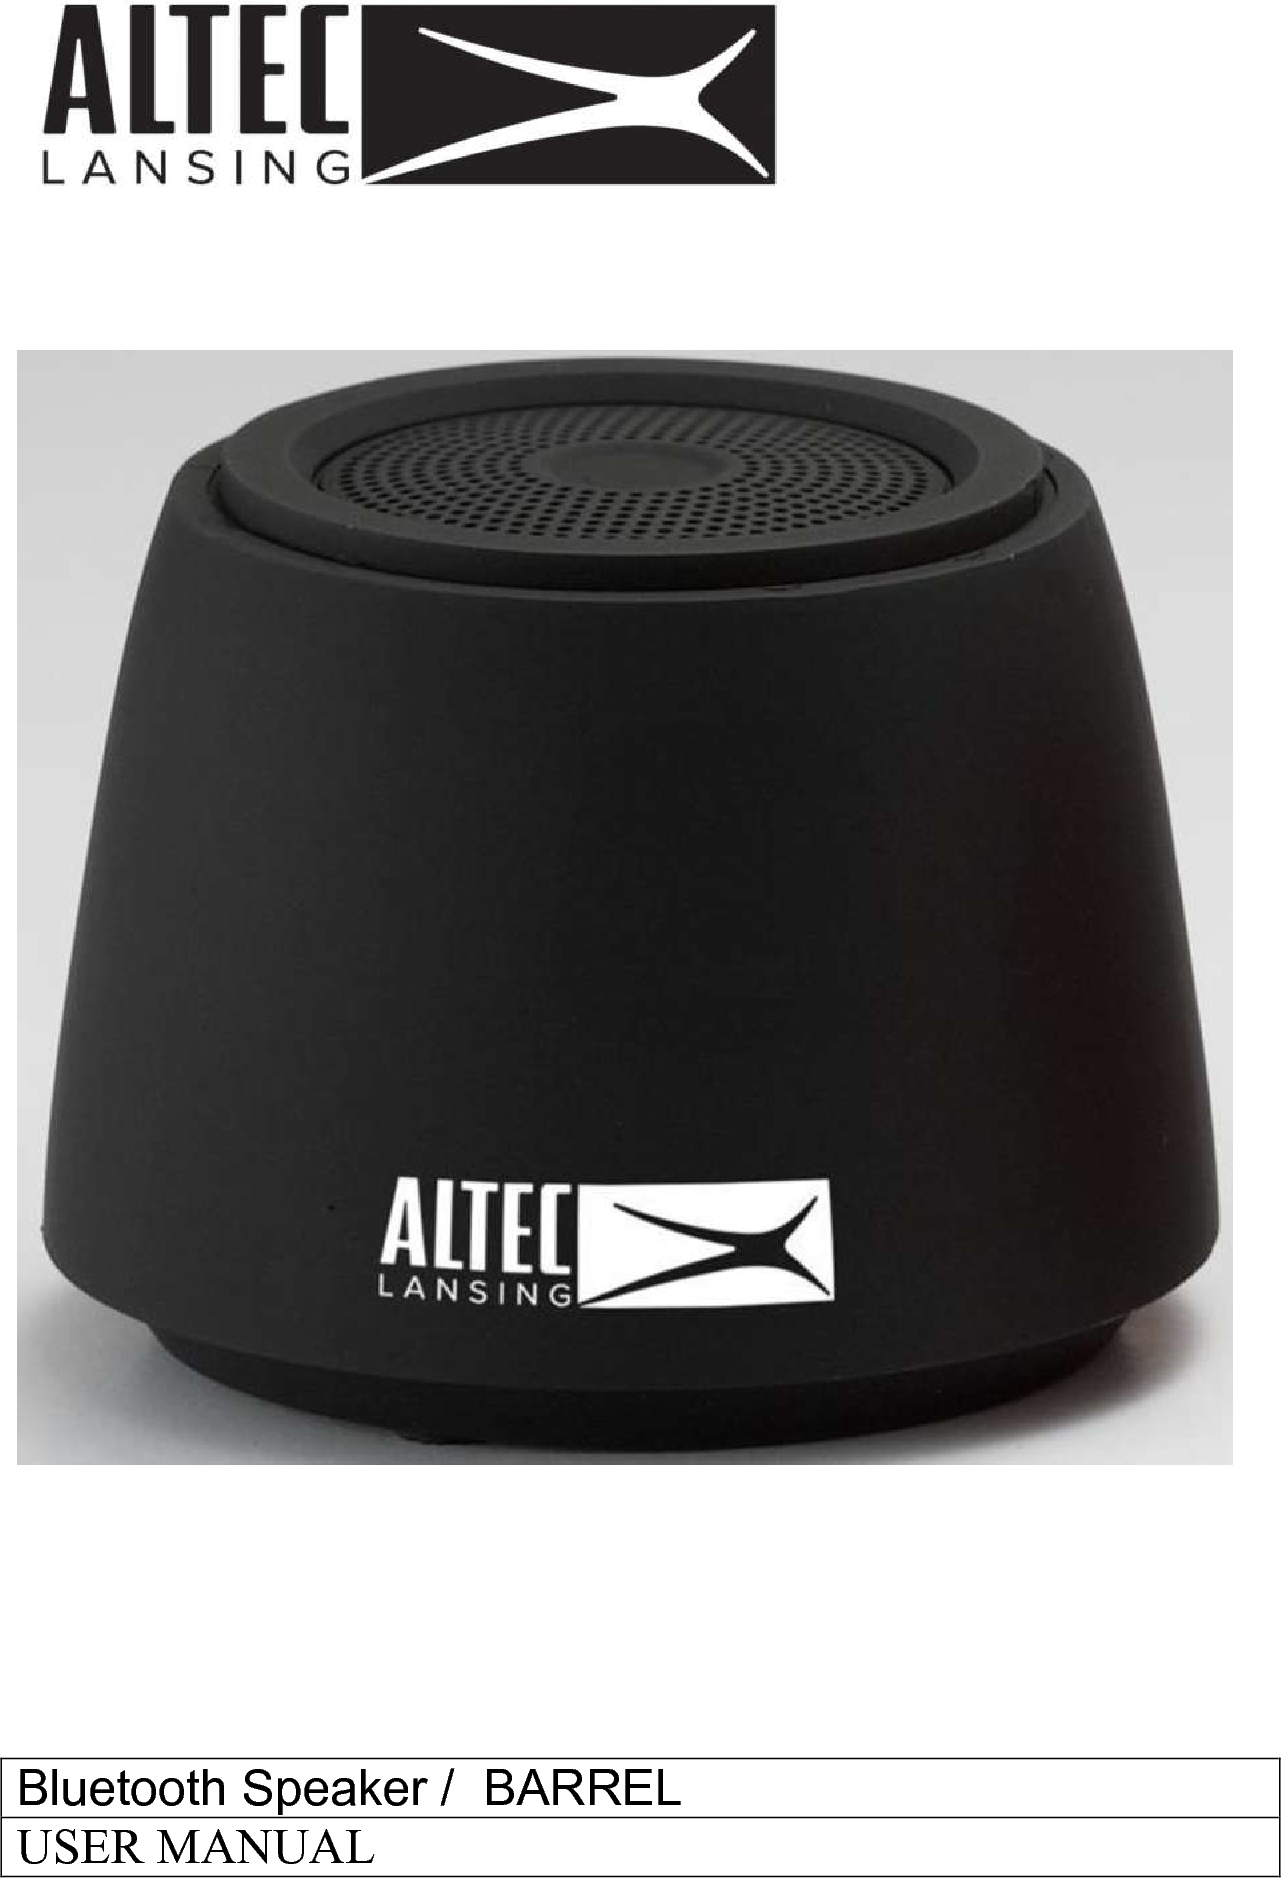 Bluetooth Speaker / BARRELUSER MANUAL